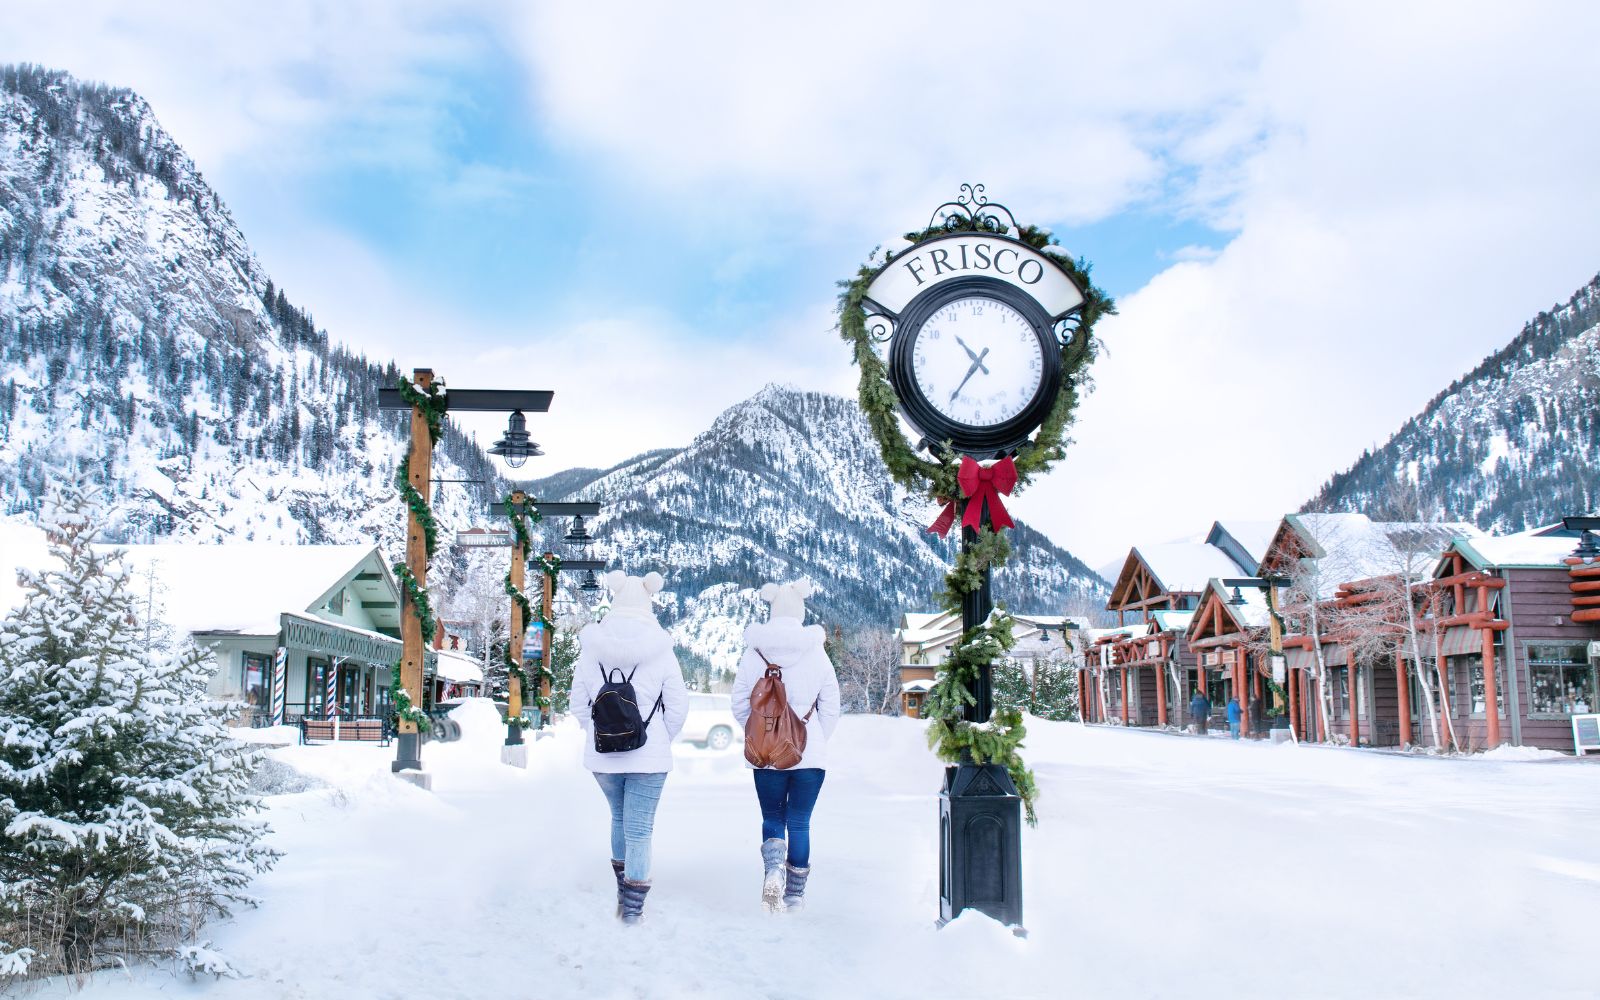 Best Snowy U.S. Destinations To Visit This Winter